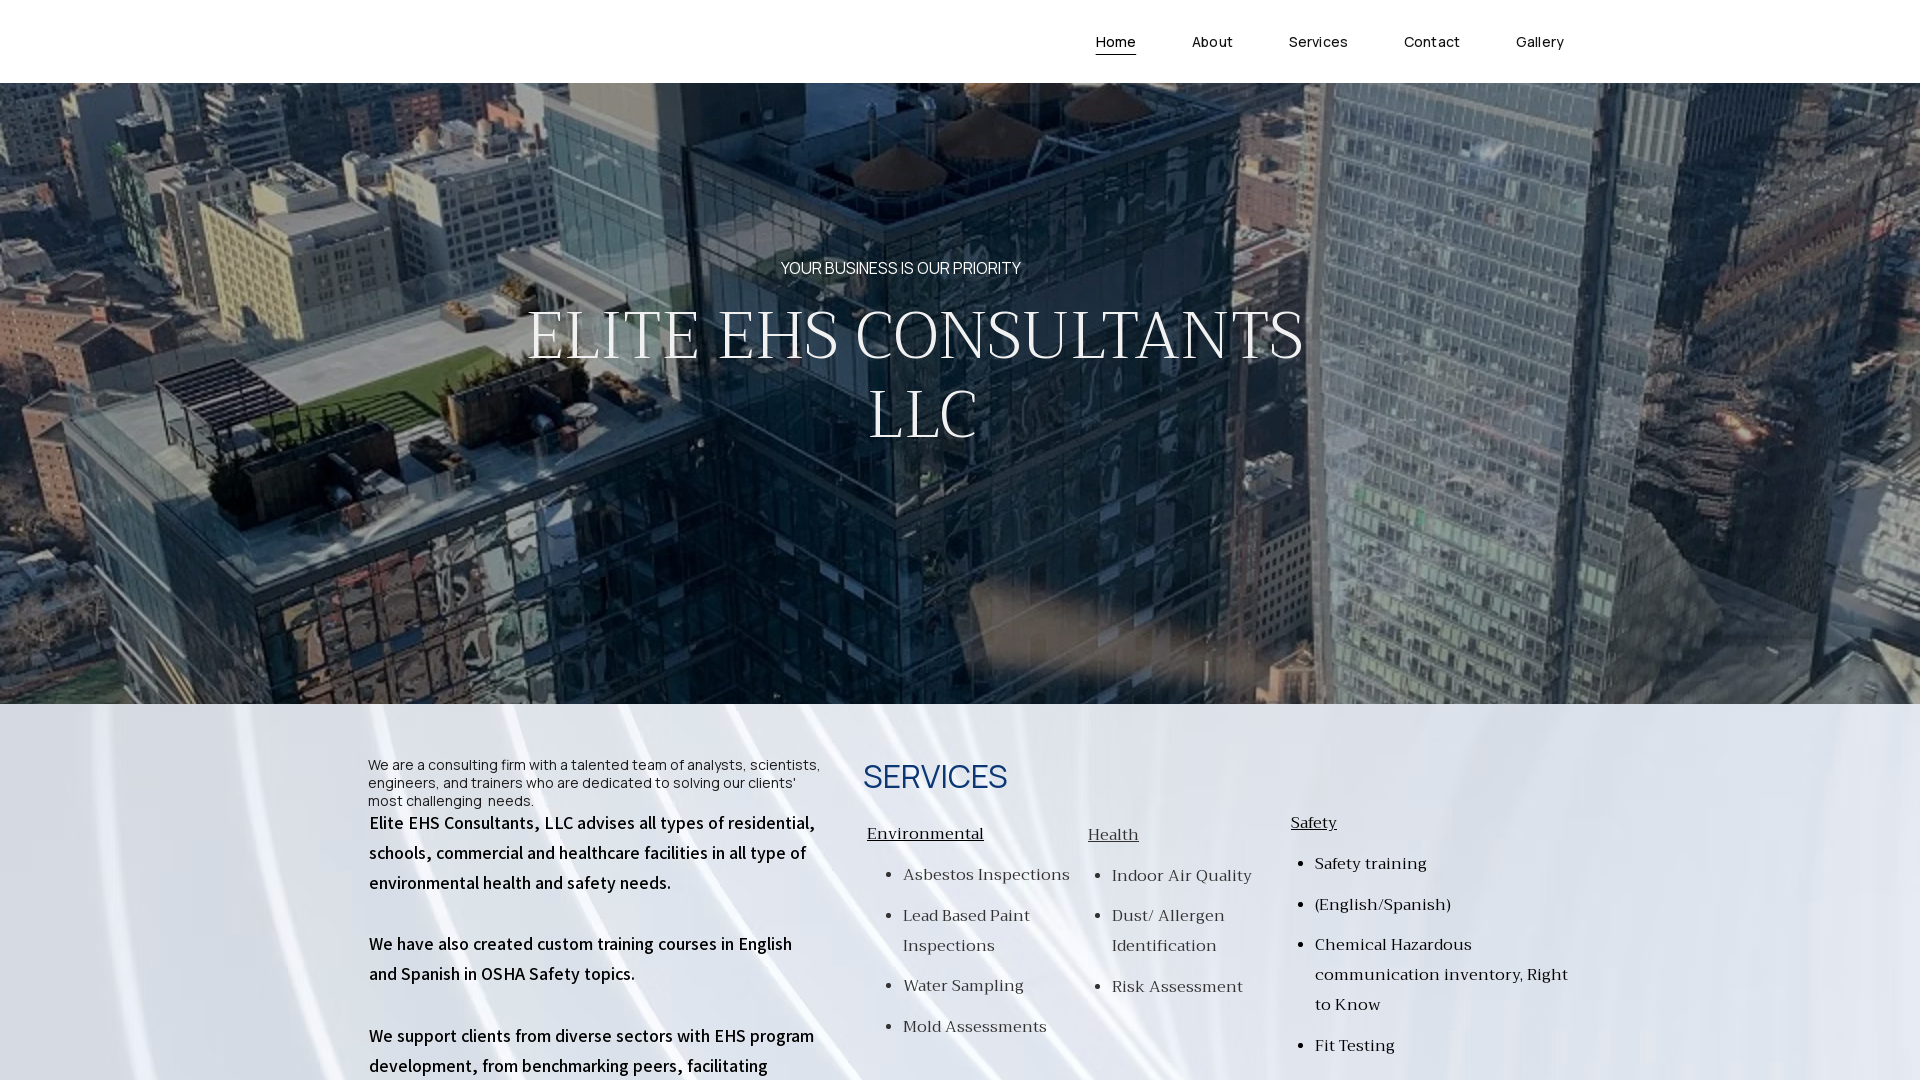 Elite EHS Consultants, LLC